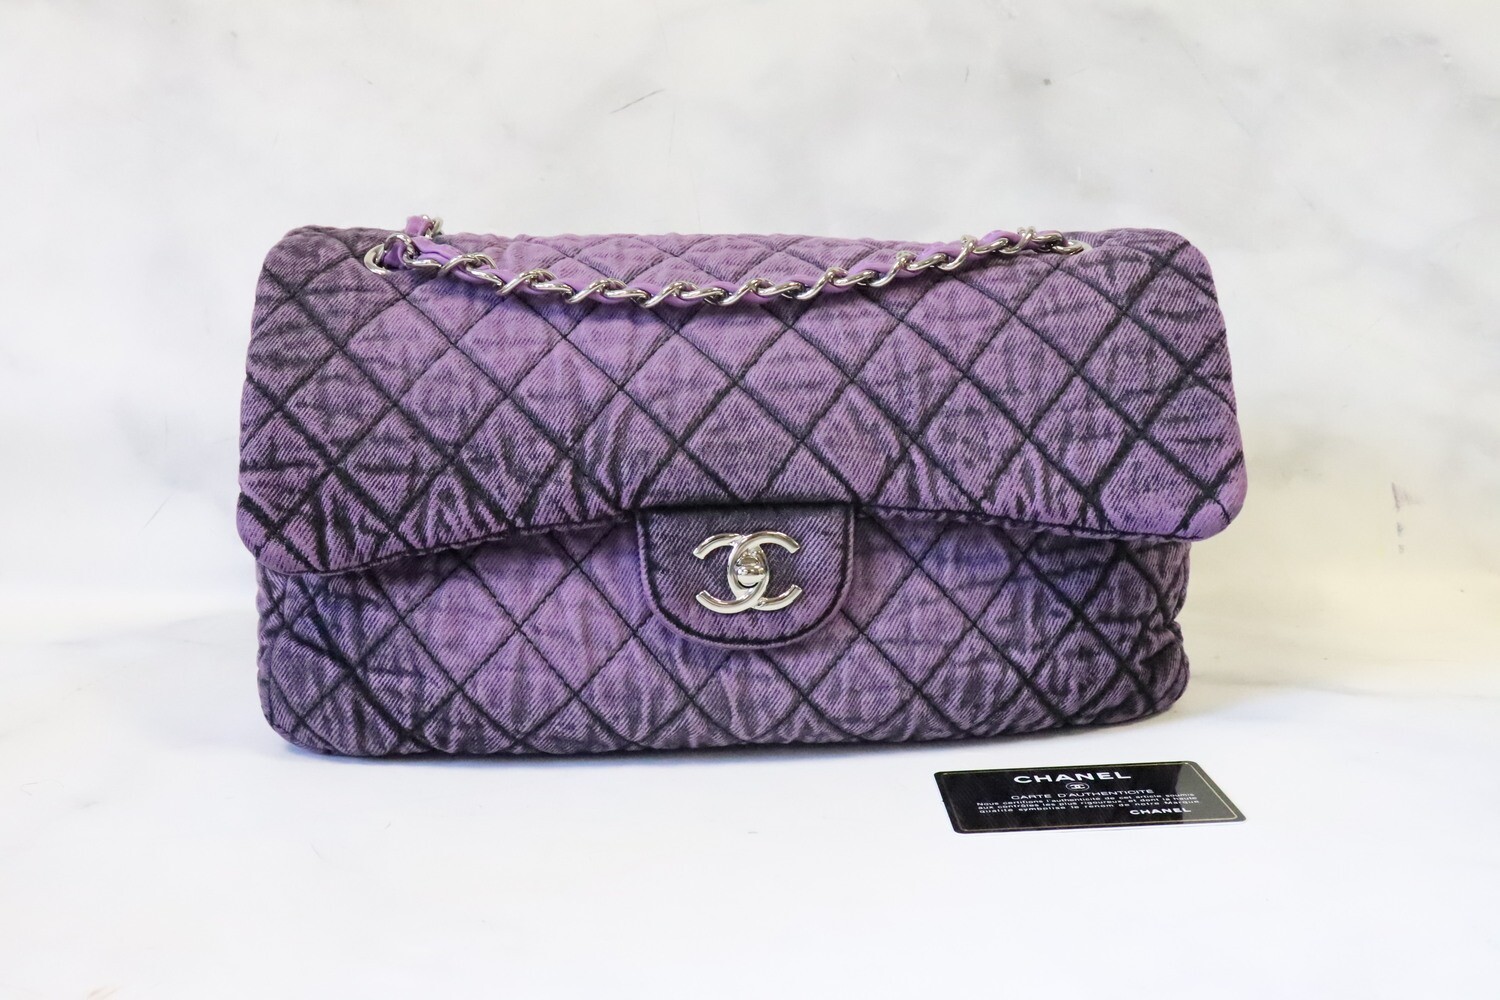 Chanel Denimpressions Medium Purple, Like New in Dustbag - Julia Rose  Boston